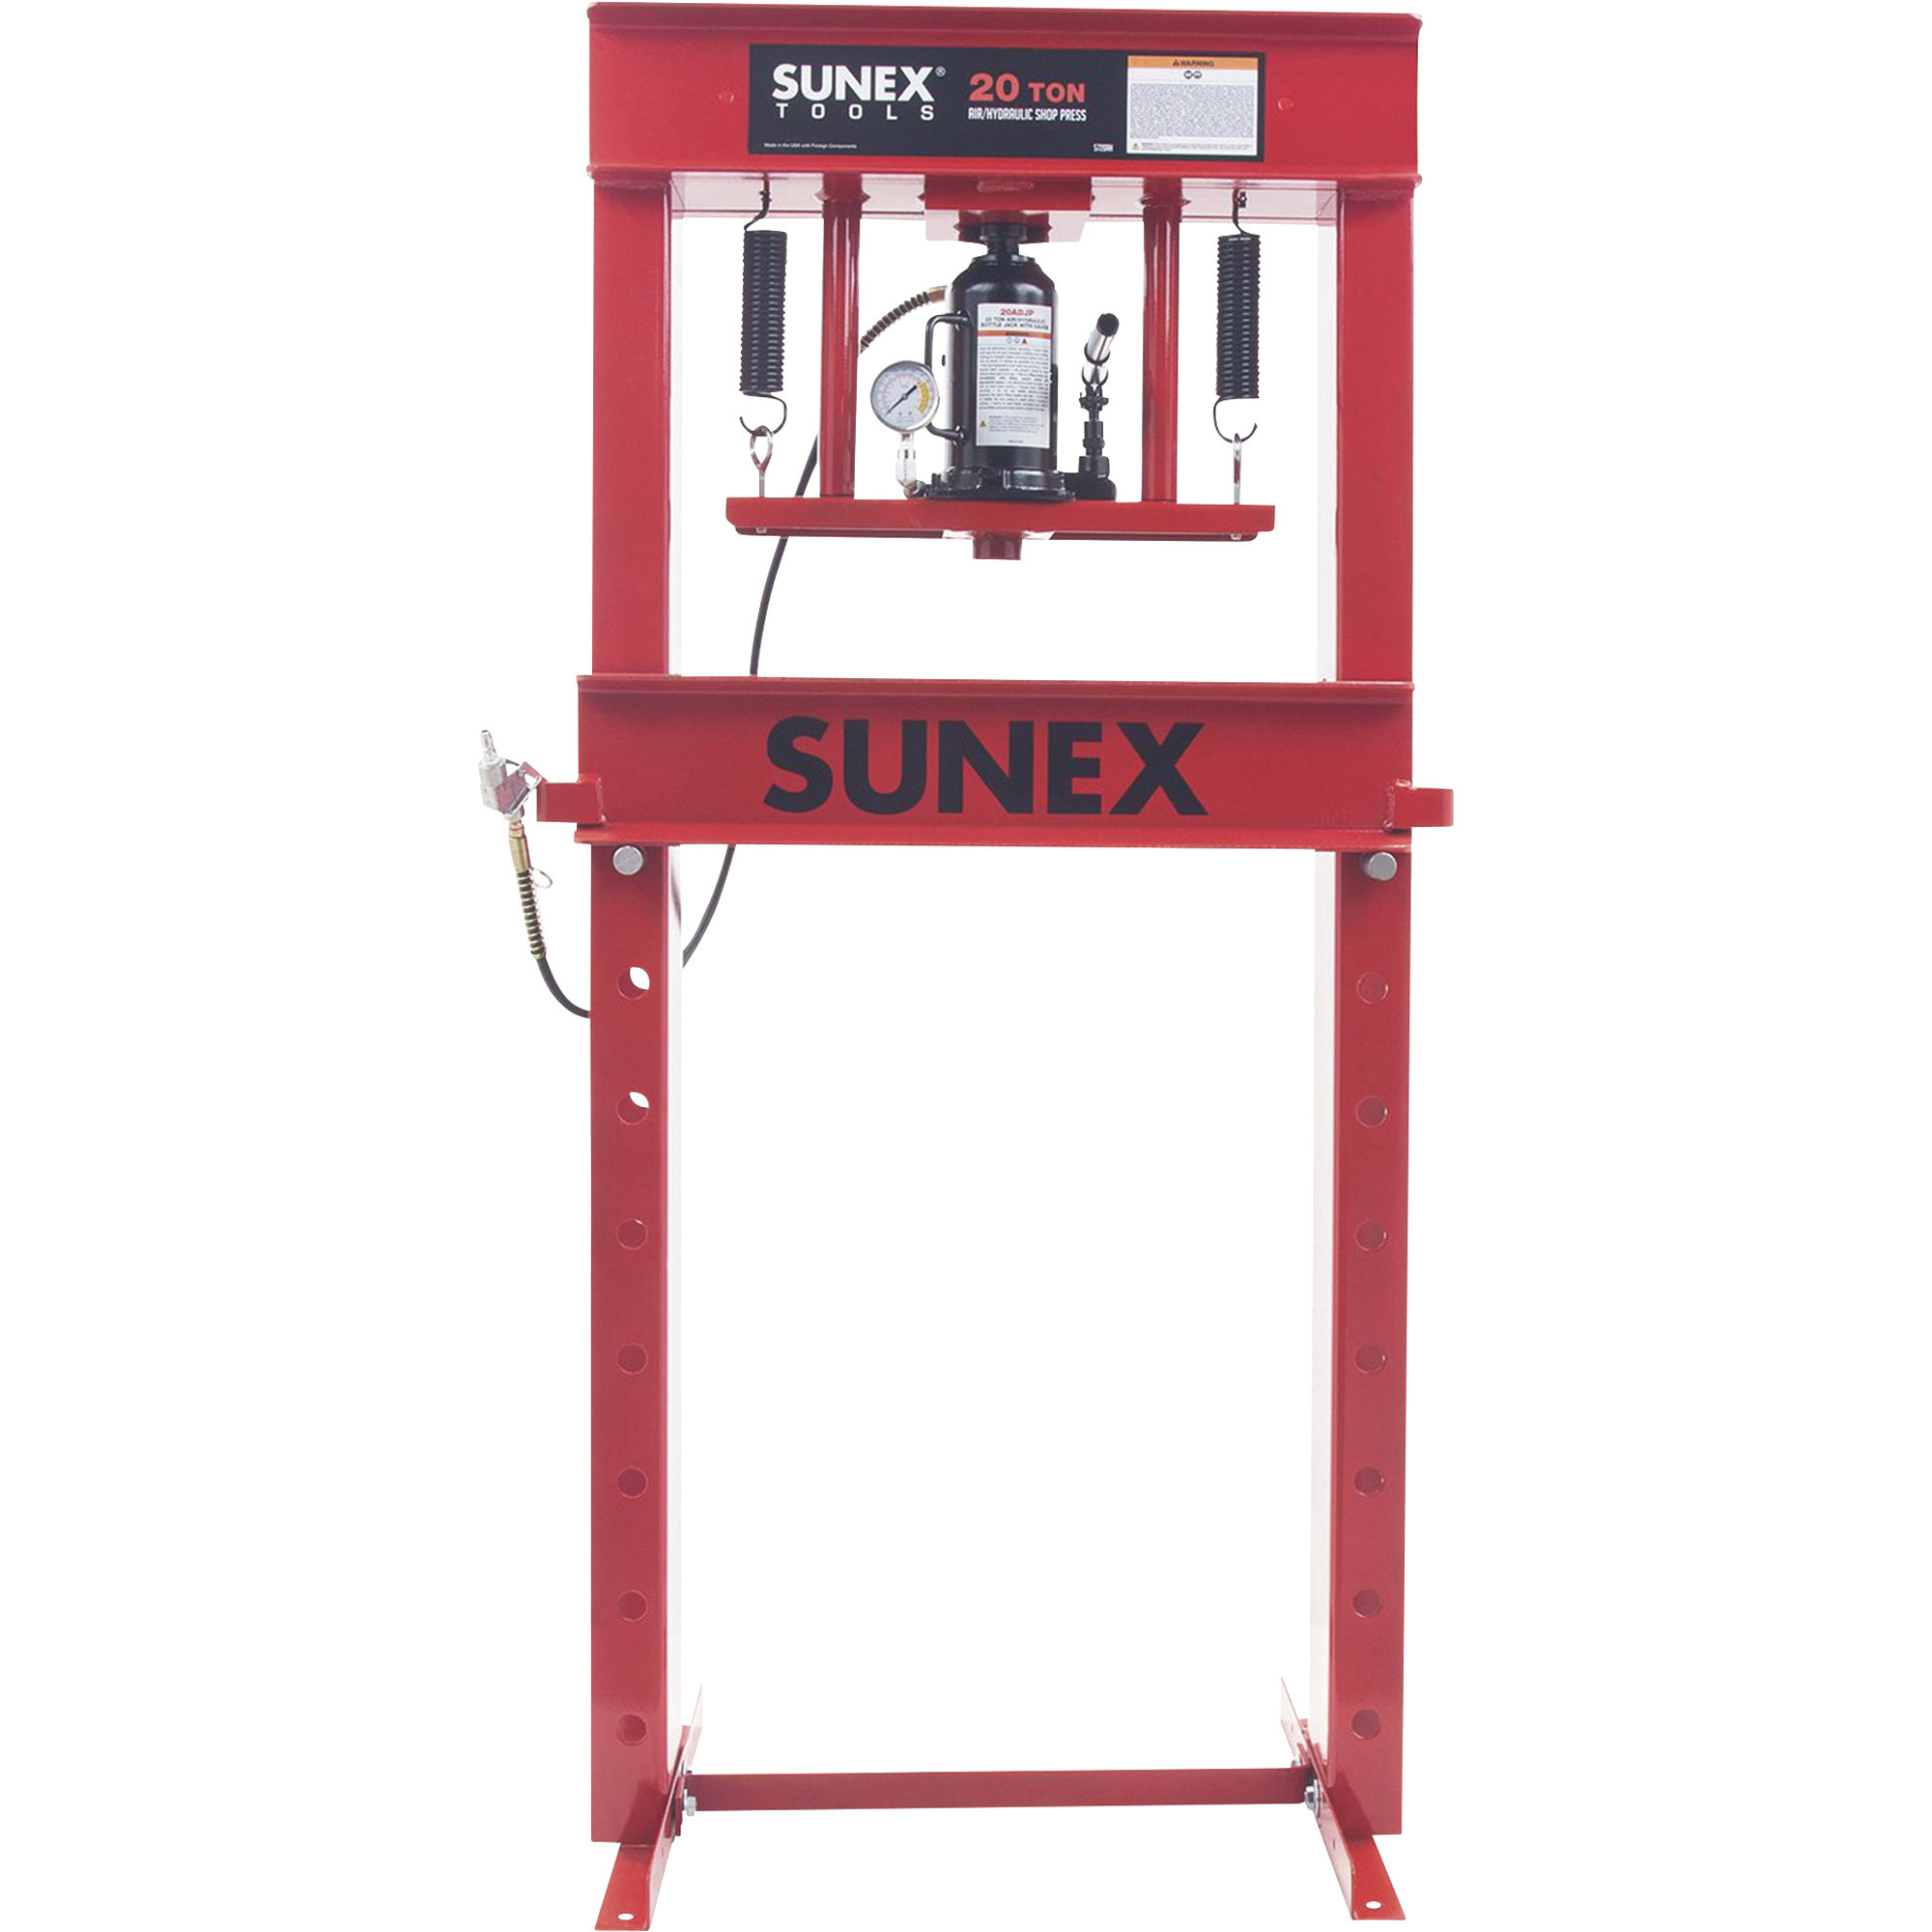 SUNEX 20-Ton Air/Hydraulic Shop Press, Model 5720AH